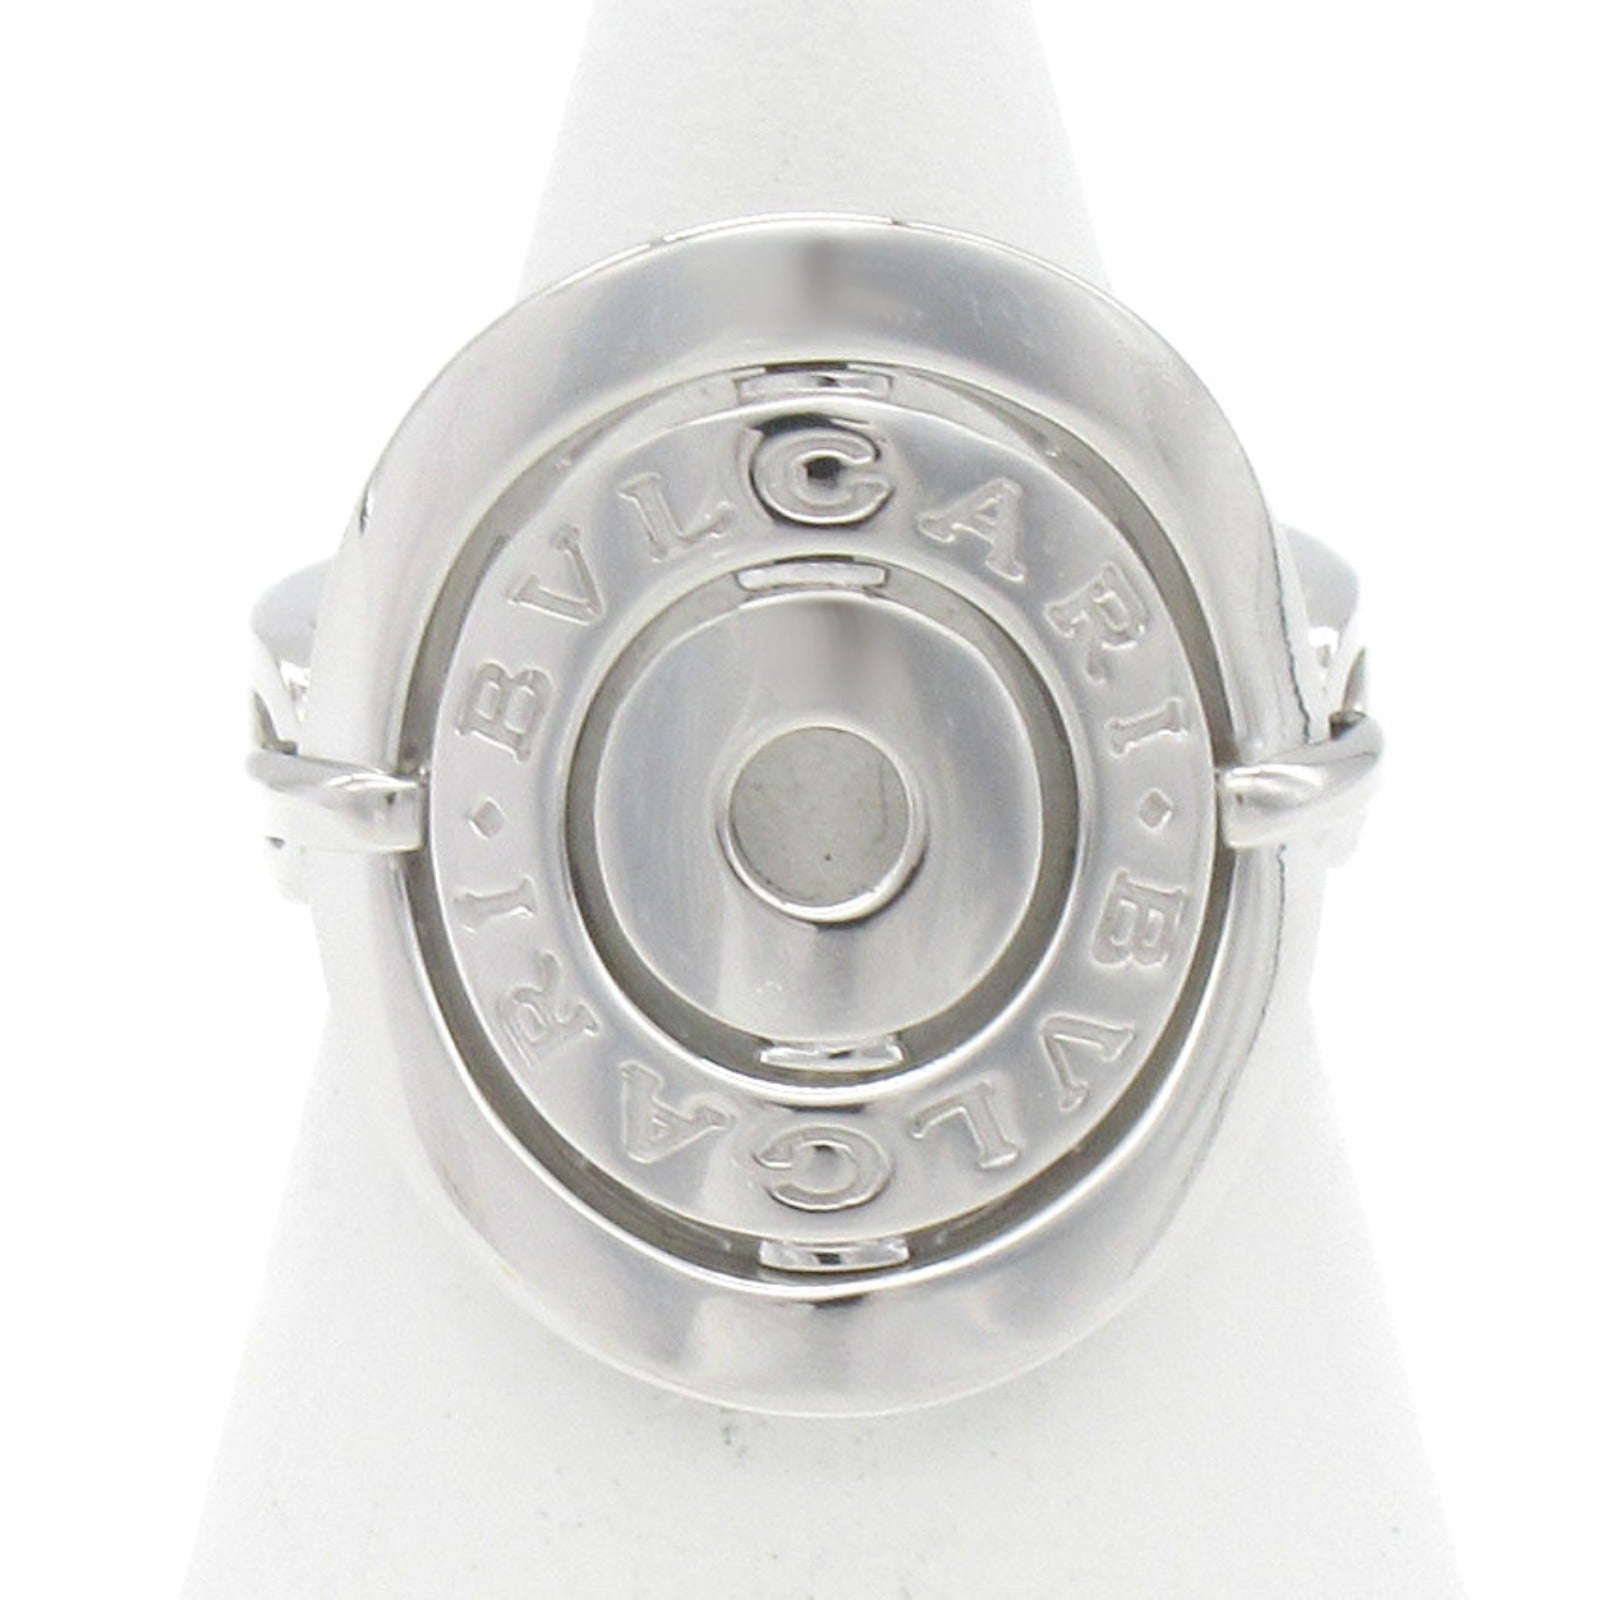 Bulgari BVLGARI Astral Ring Ring Jewelry K18WG (White G)   Silver